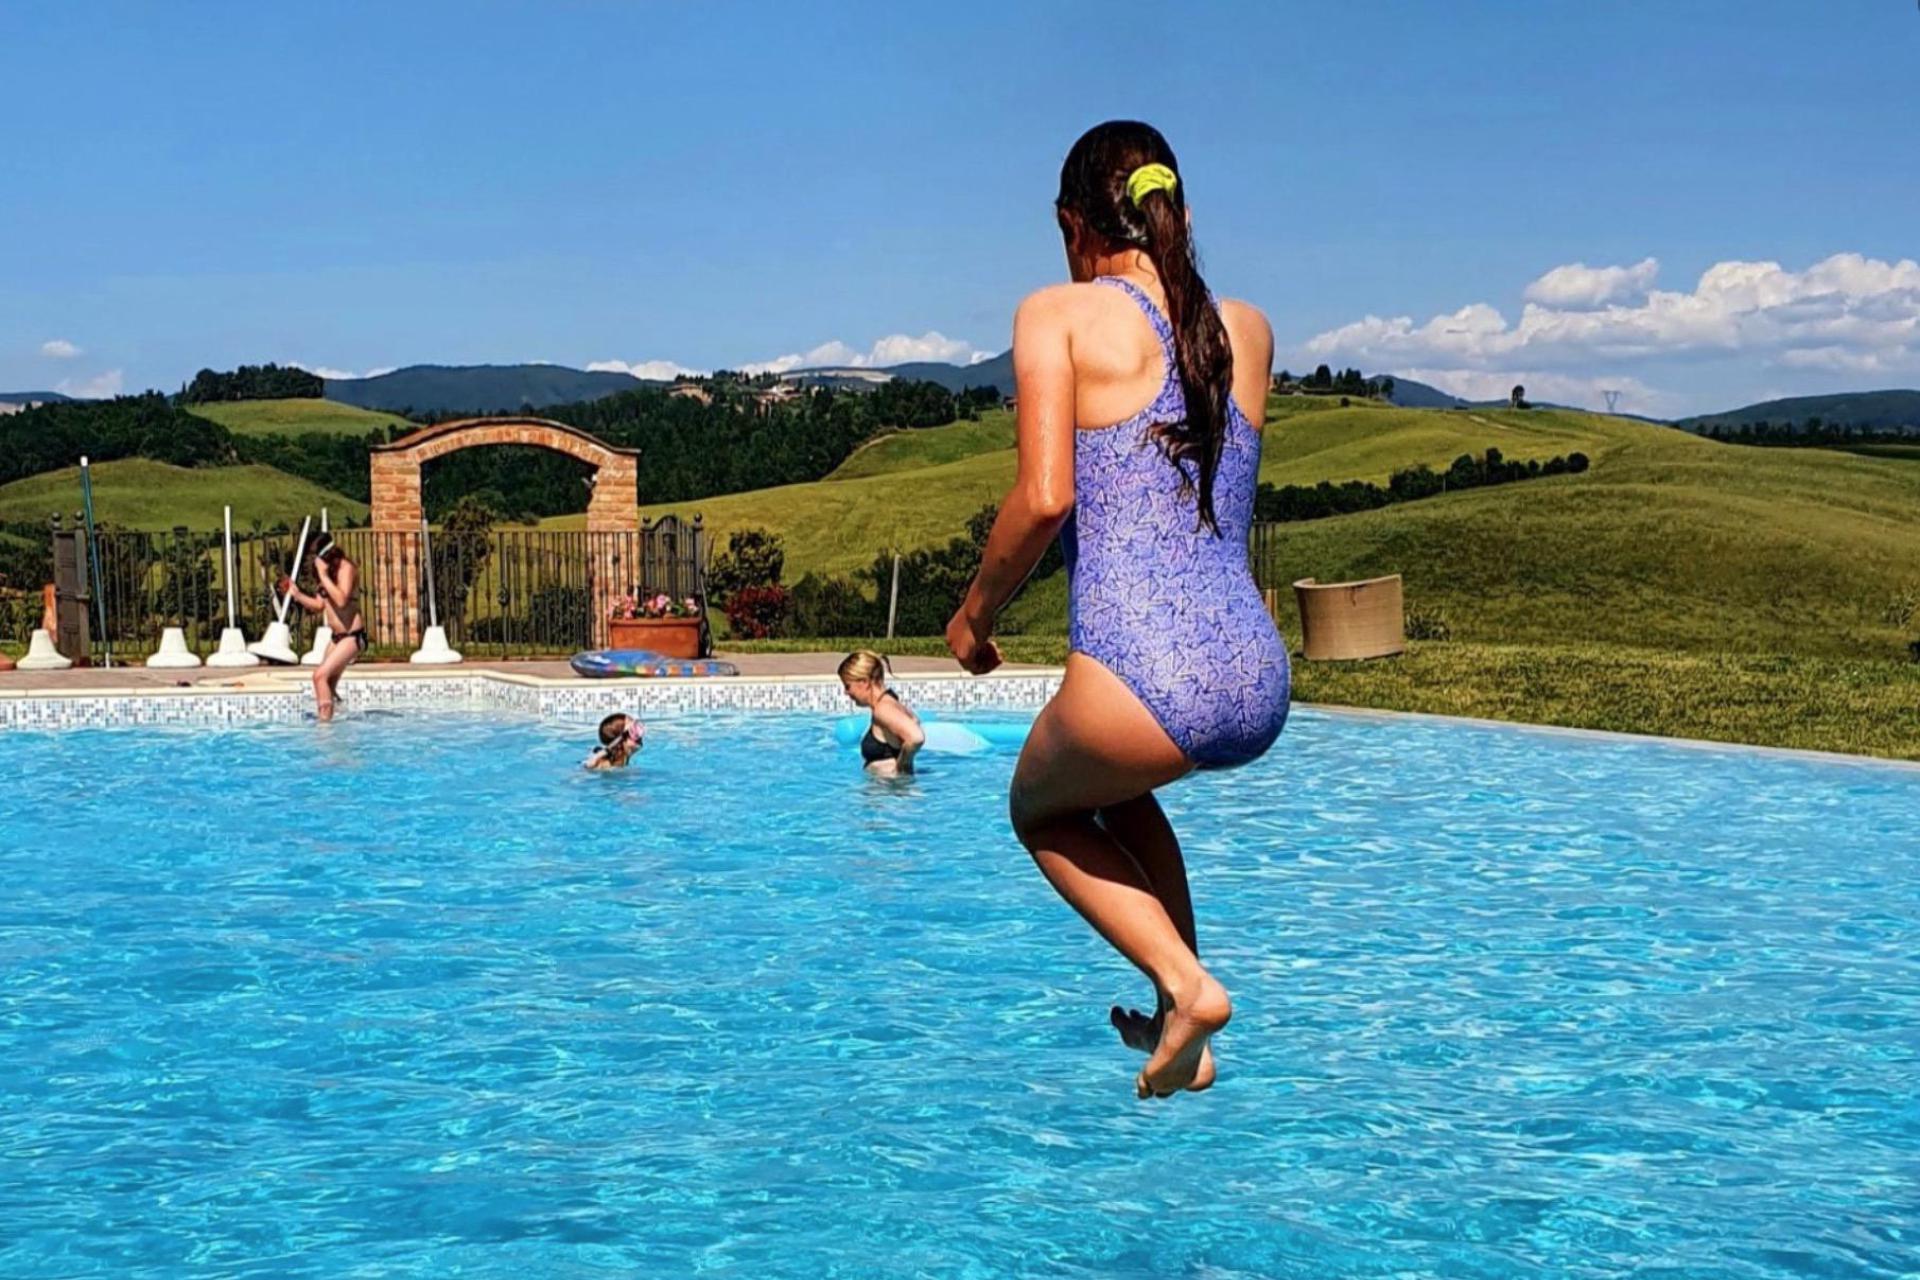 Agriturismo Tuscany Family-friendly agriturismo Tuscany with lovely pool